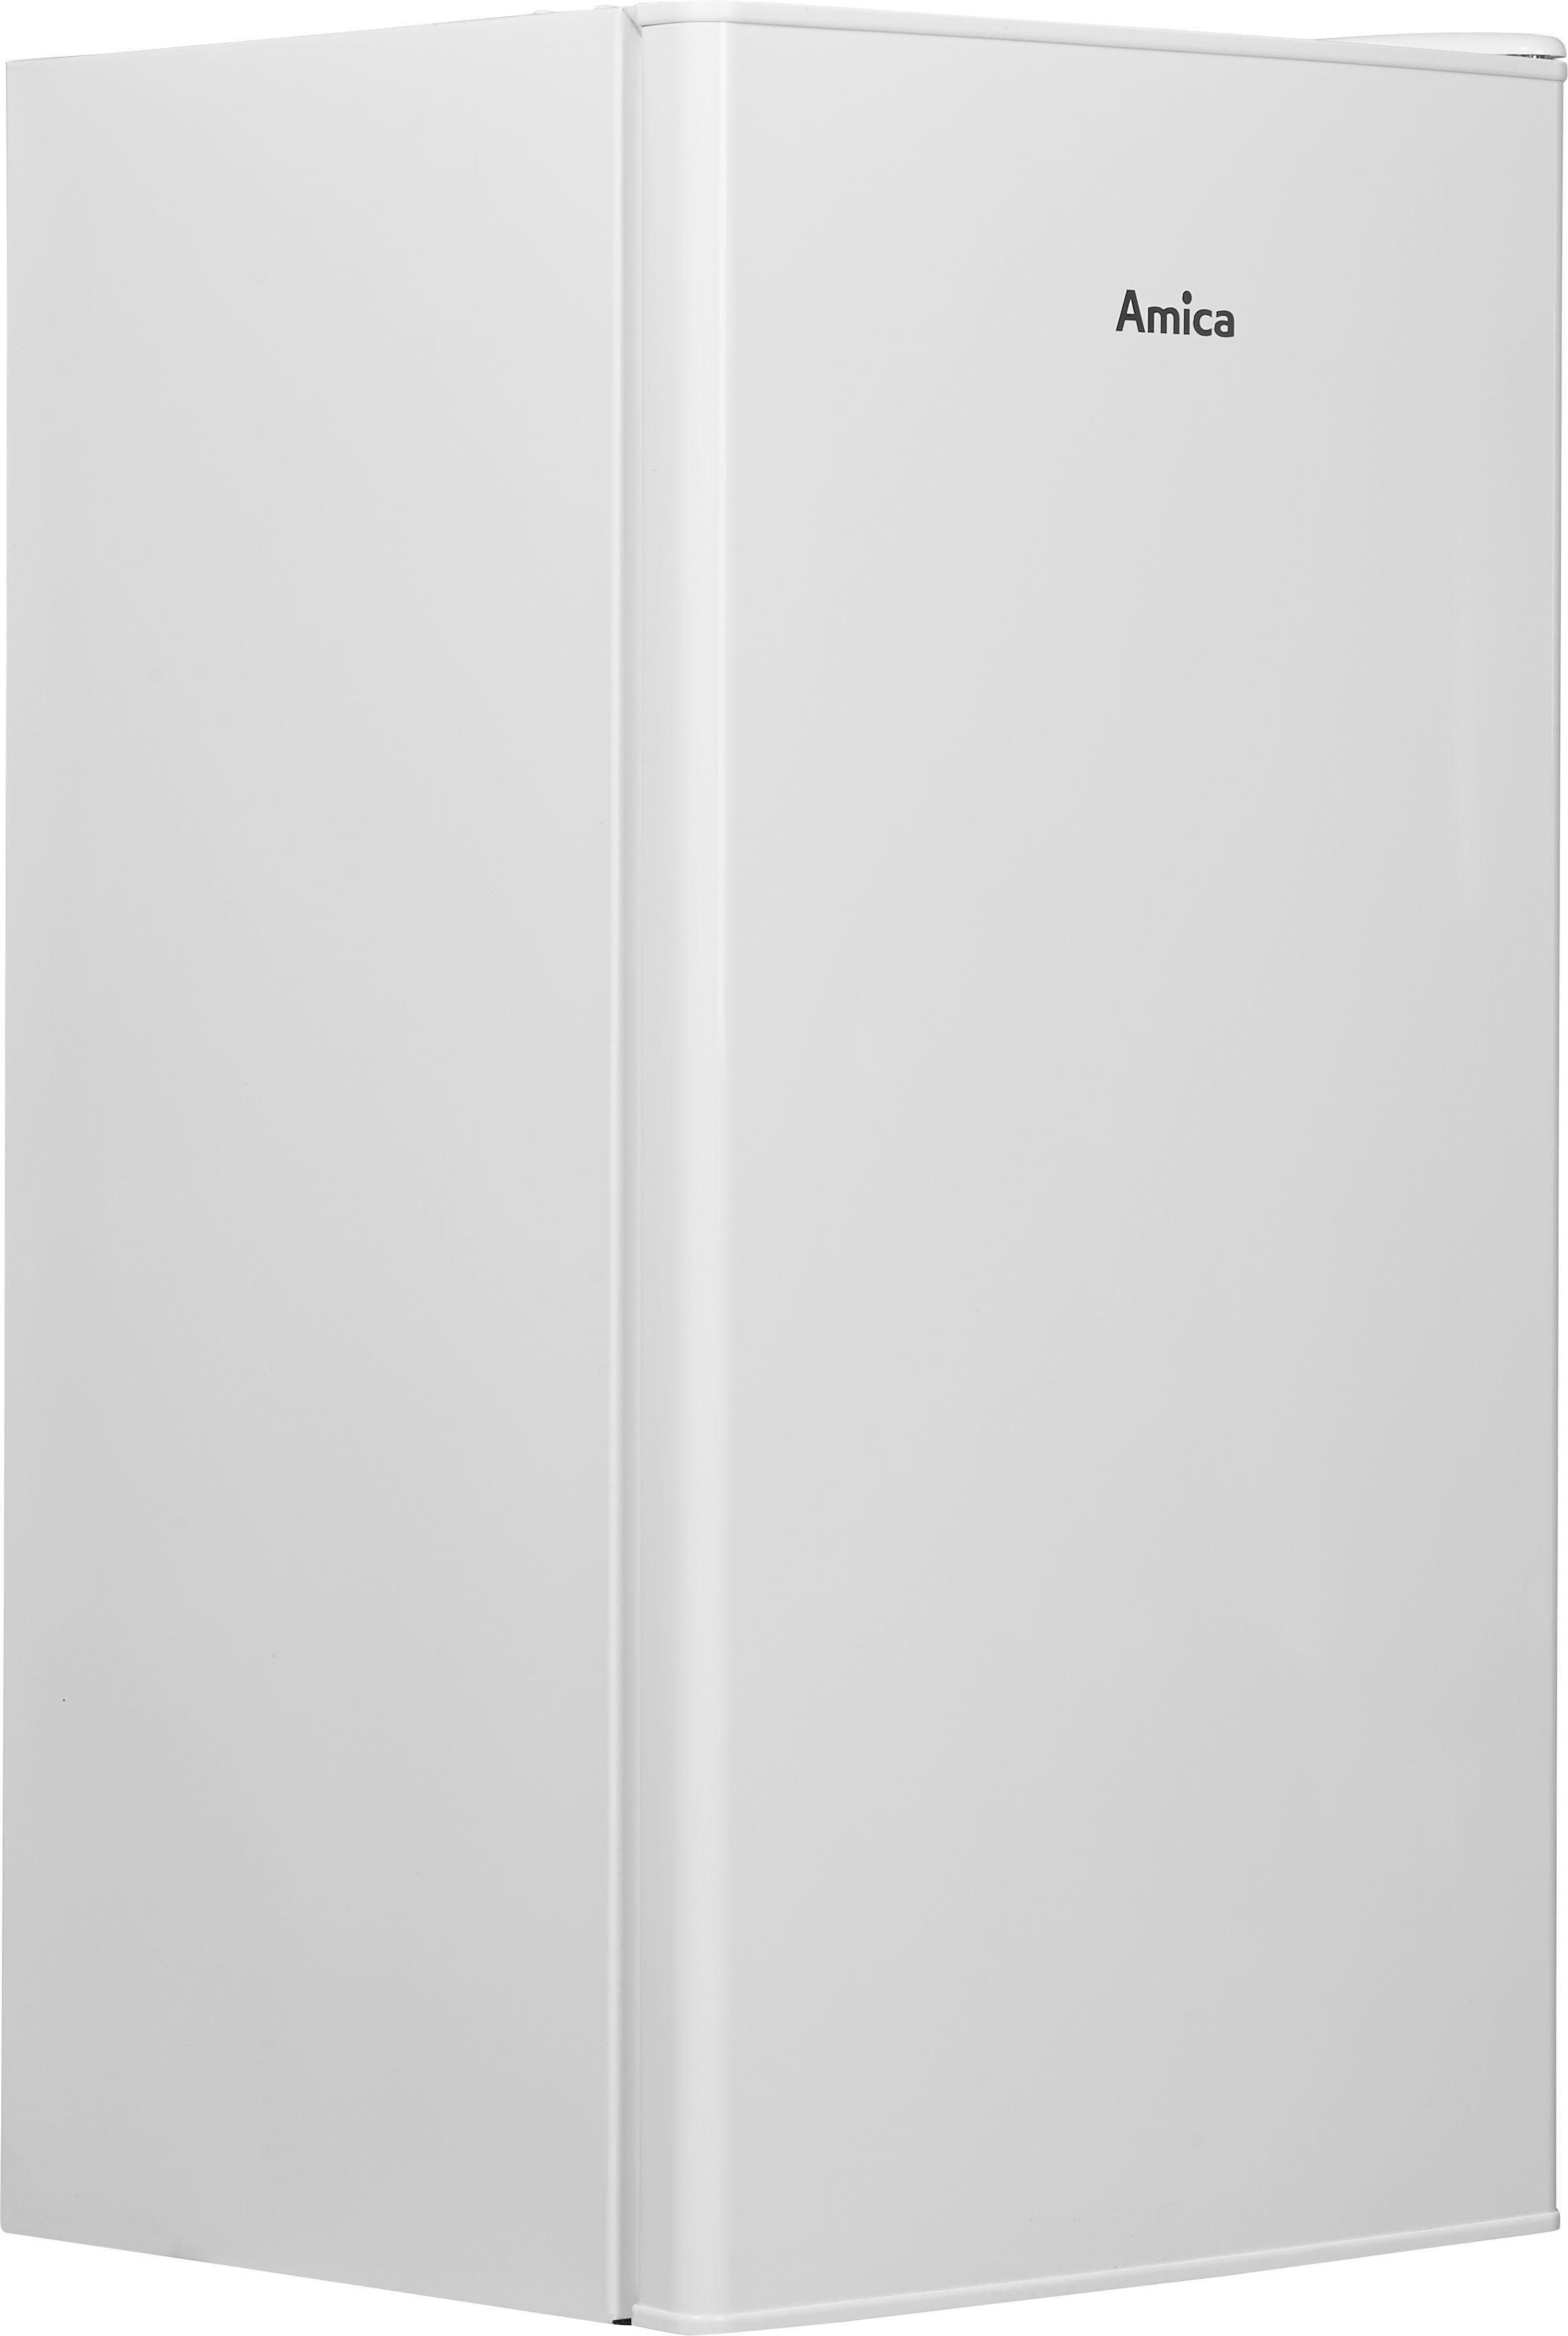 Table Kühlschrank 45 Top hoch, breit W, 116 351 cm cm Amica VKS 84,5